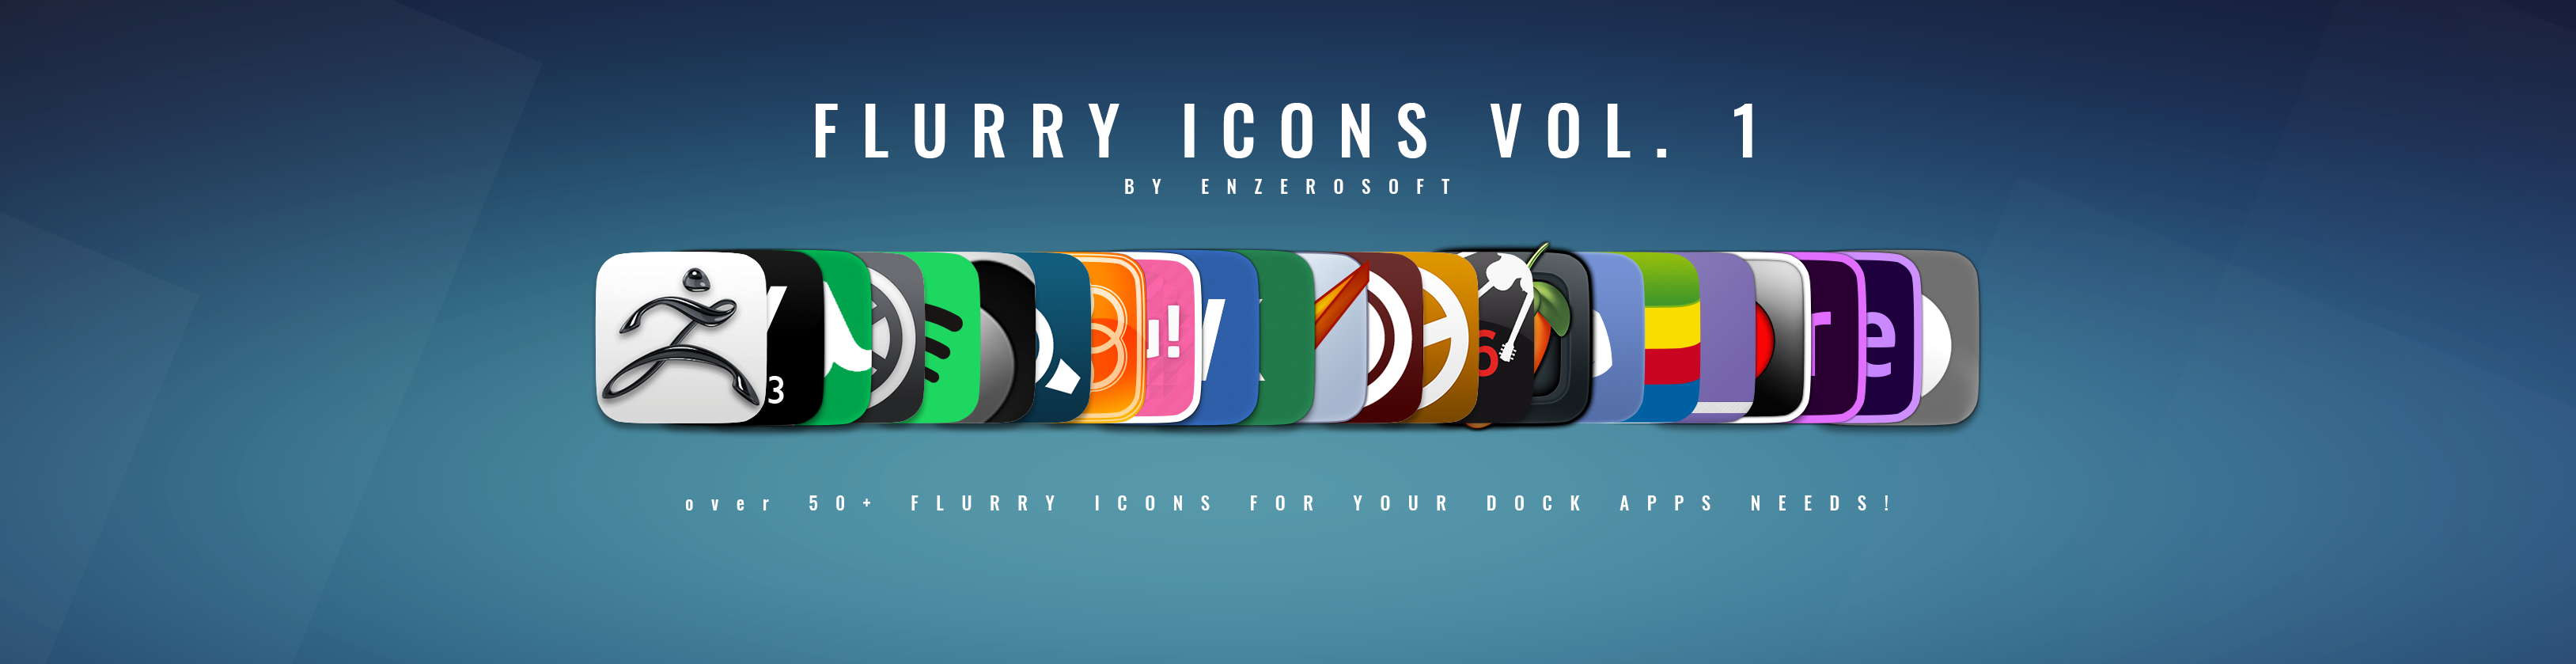 Flurry Icons Vol. 1